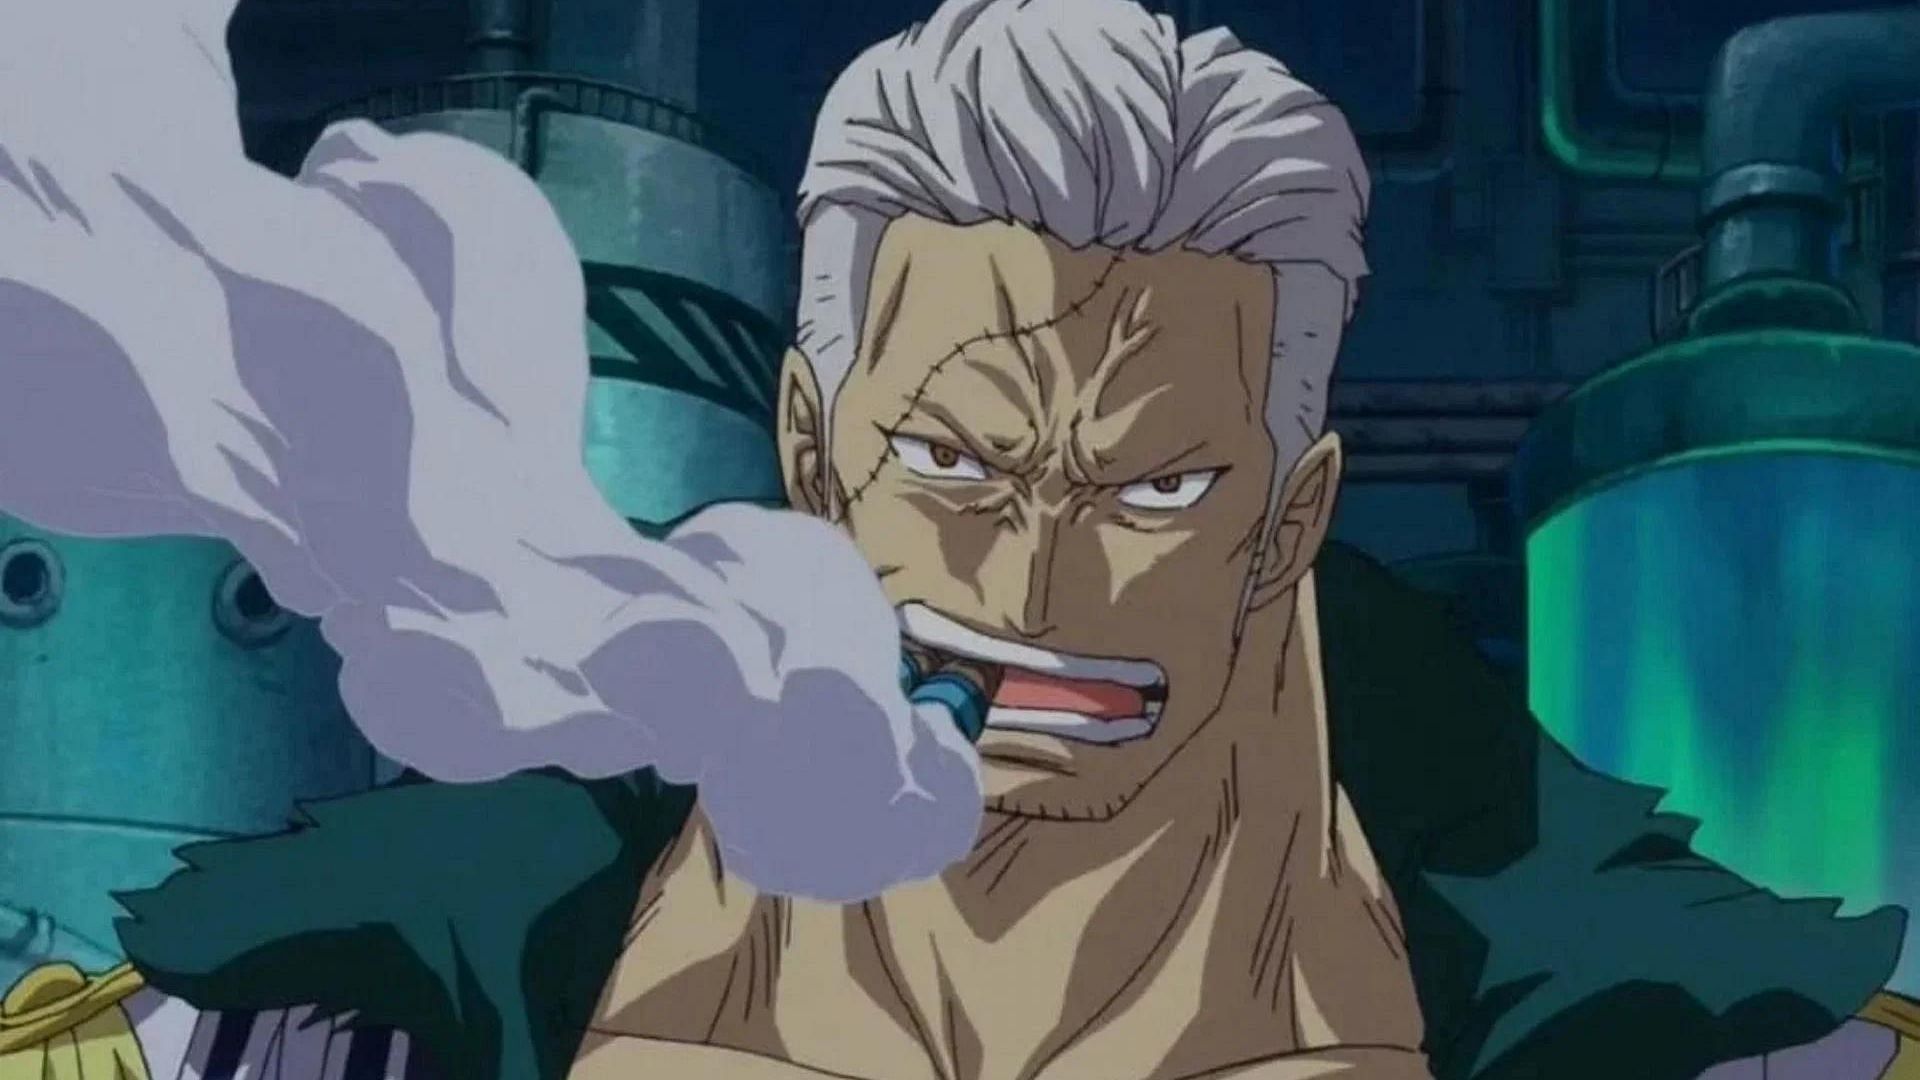 Smoker as shown in Punk Hazard (Image via Toei Animation)